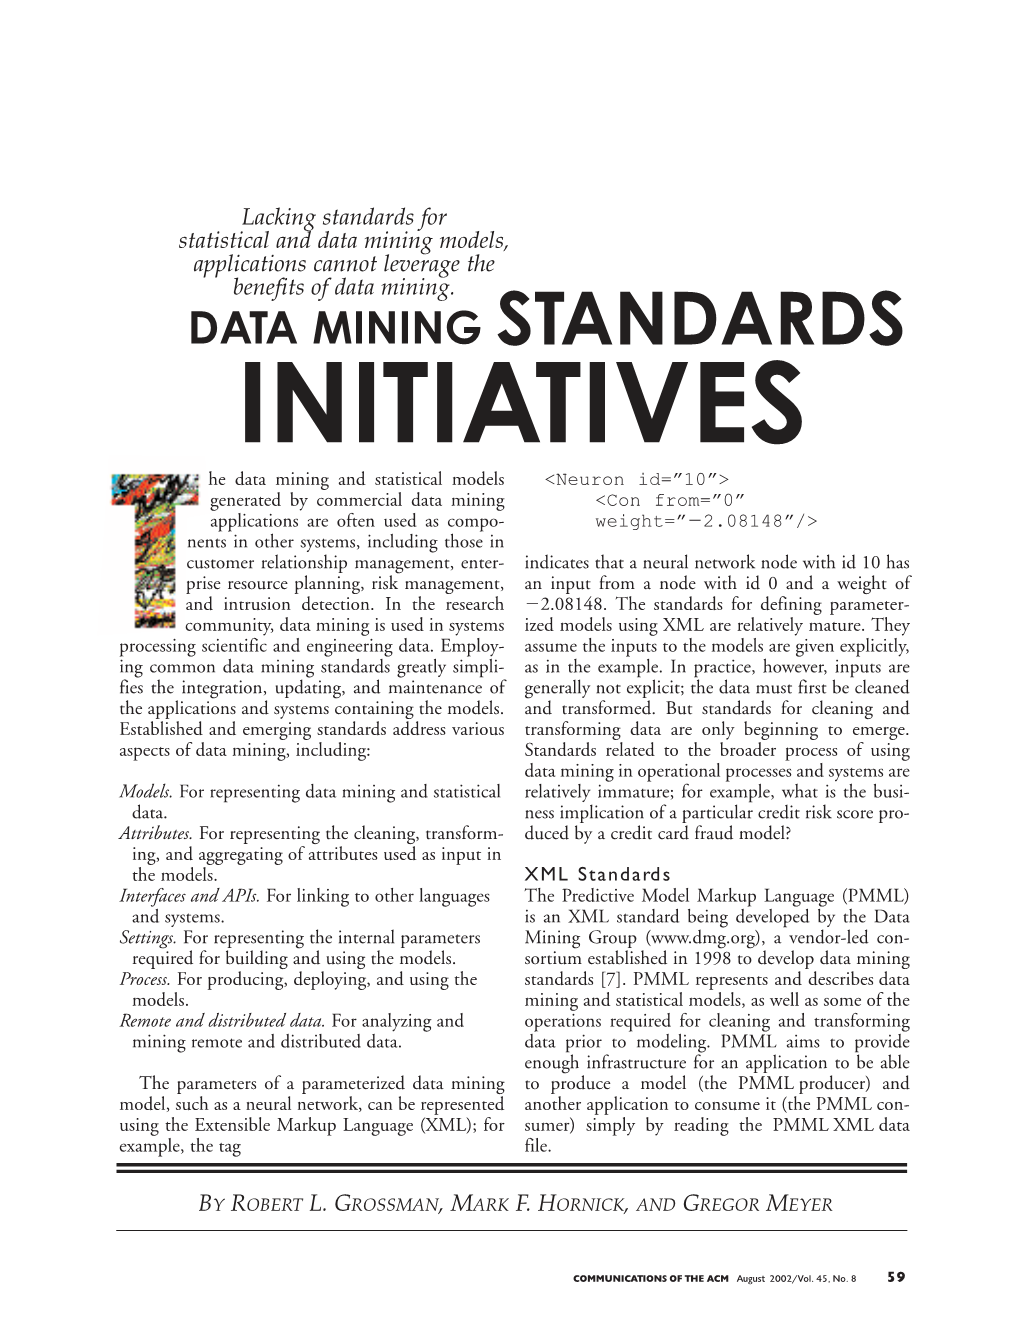 Data Mining Standards Initiatives